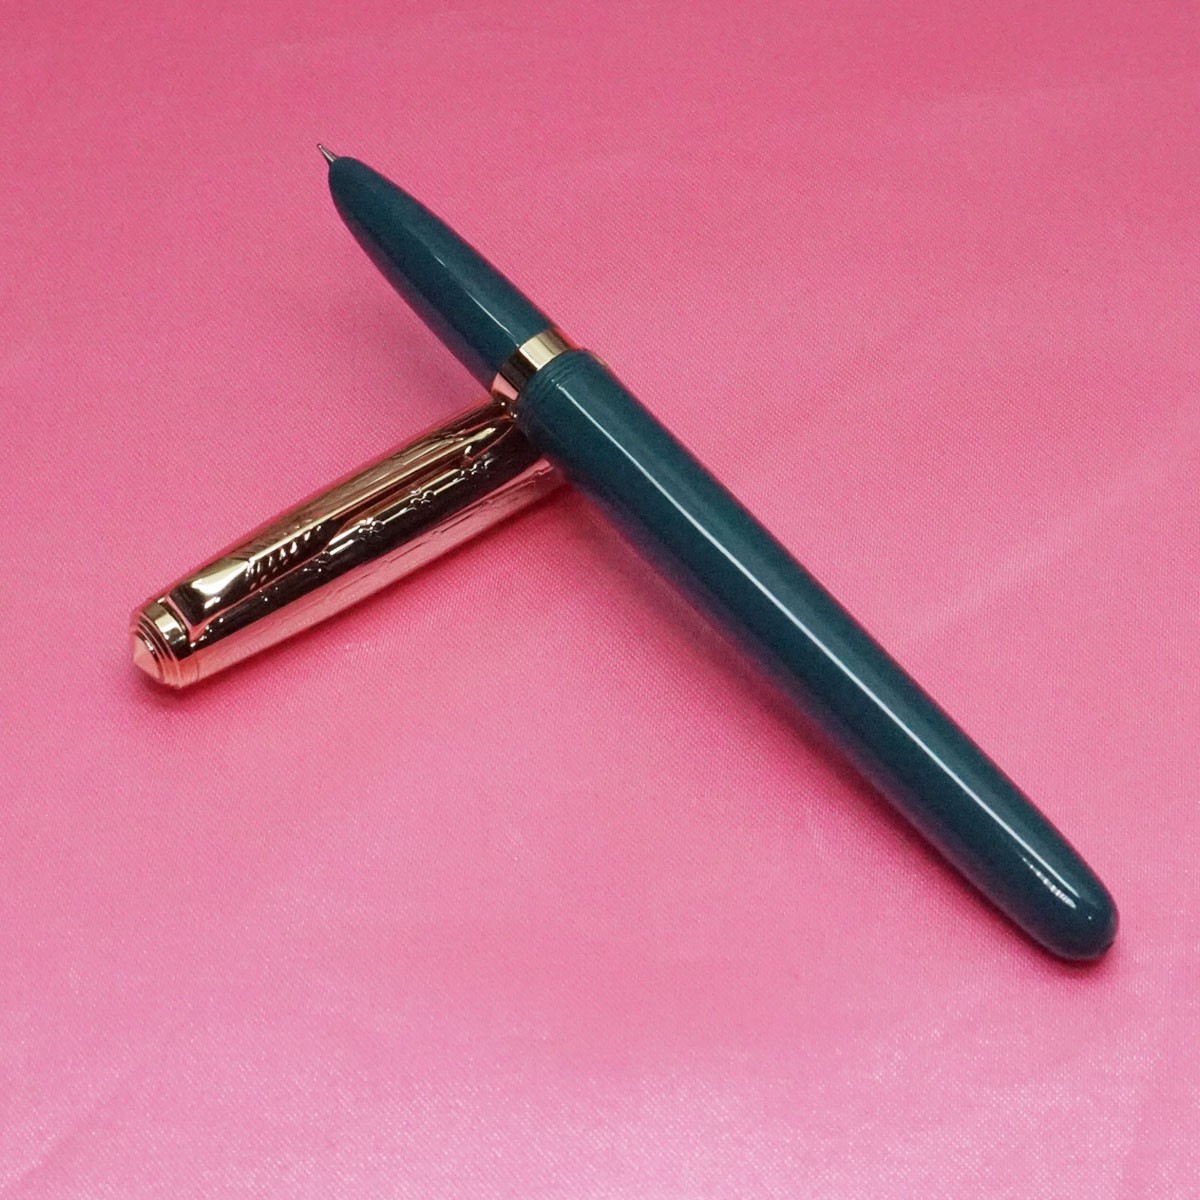 Jinhao 51  Gold Cap with Green Body No.51 SSF Nib Eye Dropper and Convertor type fountain Pen SKU 21998